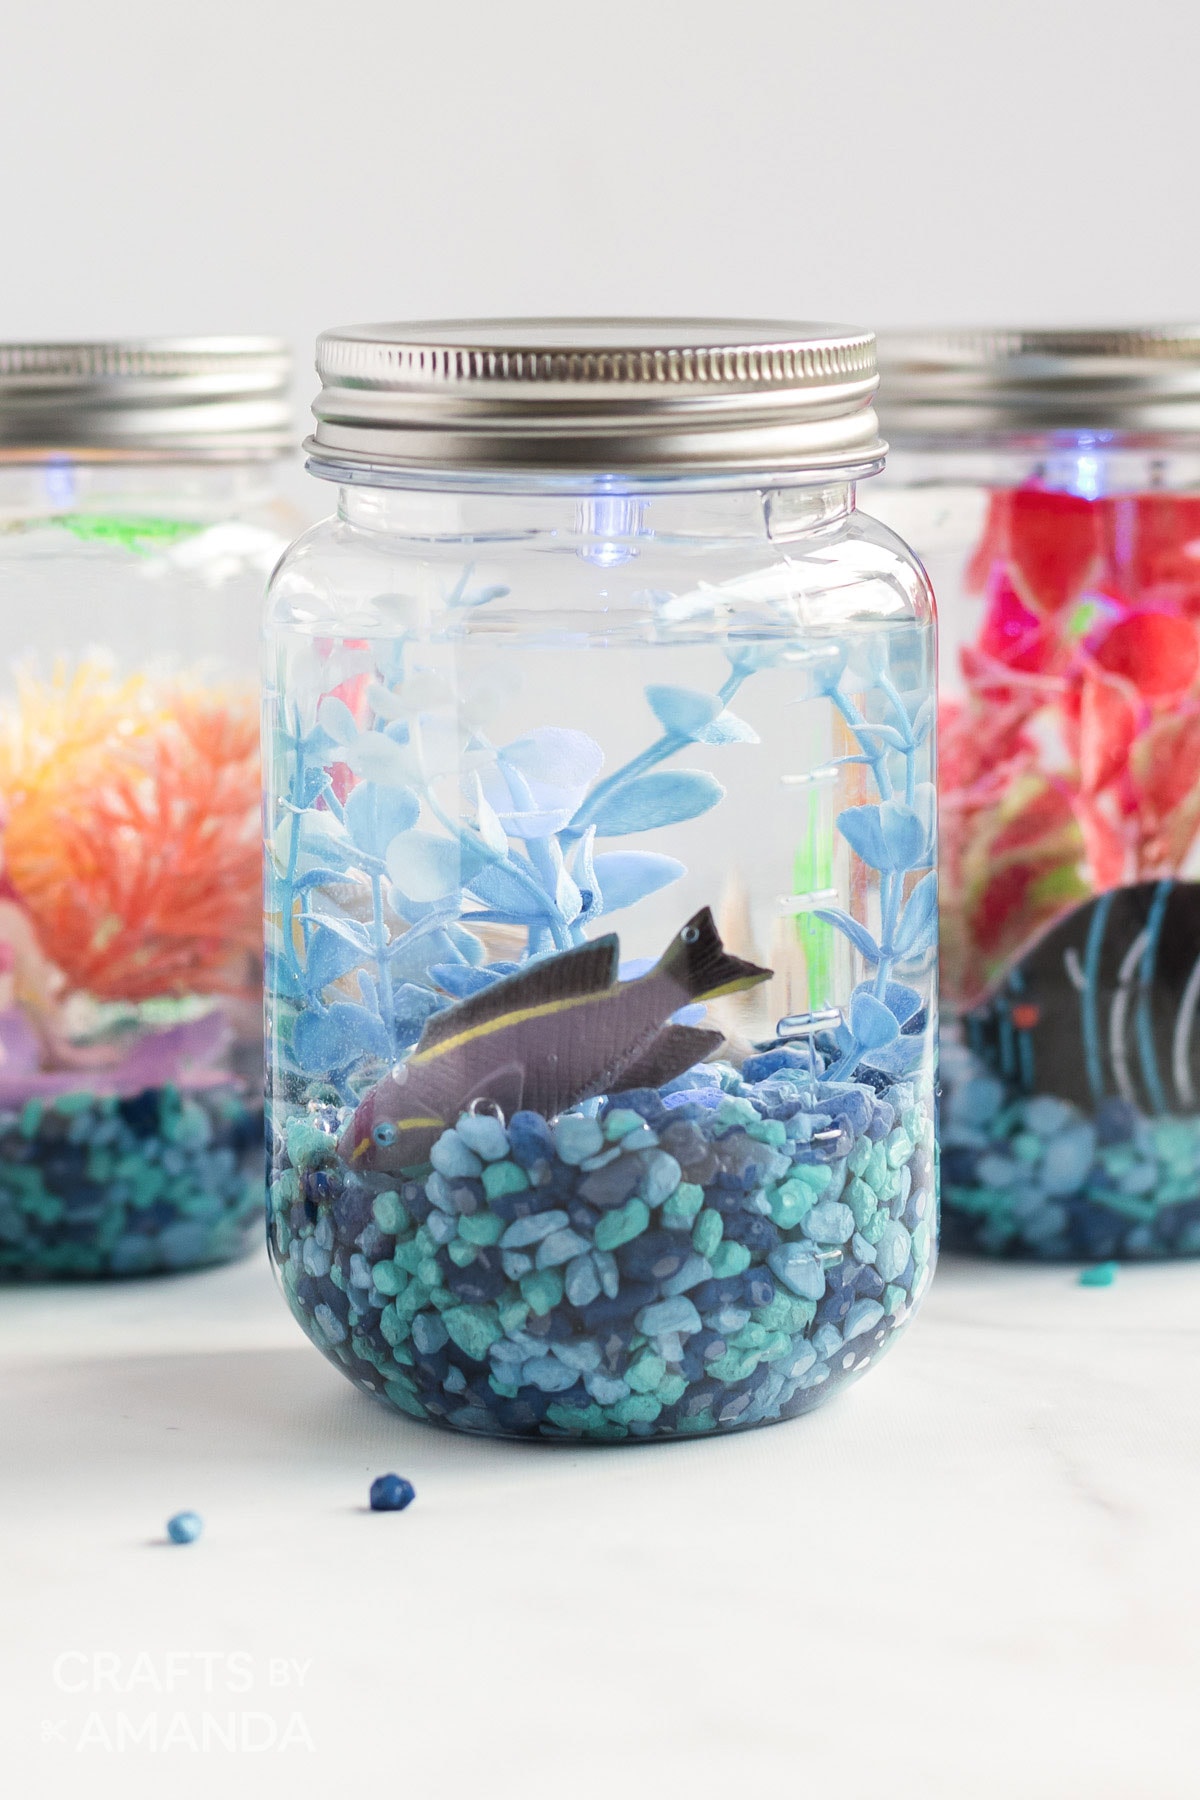 3 mason jar aquariums with plastic fish